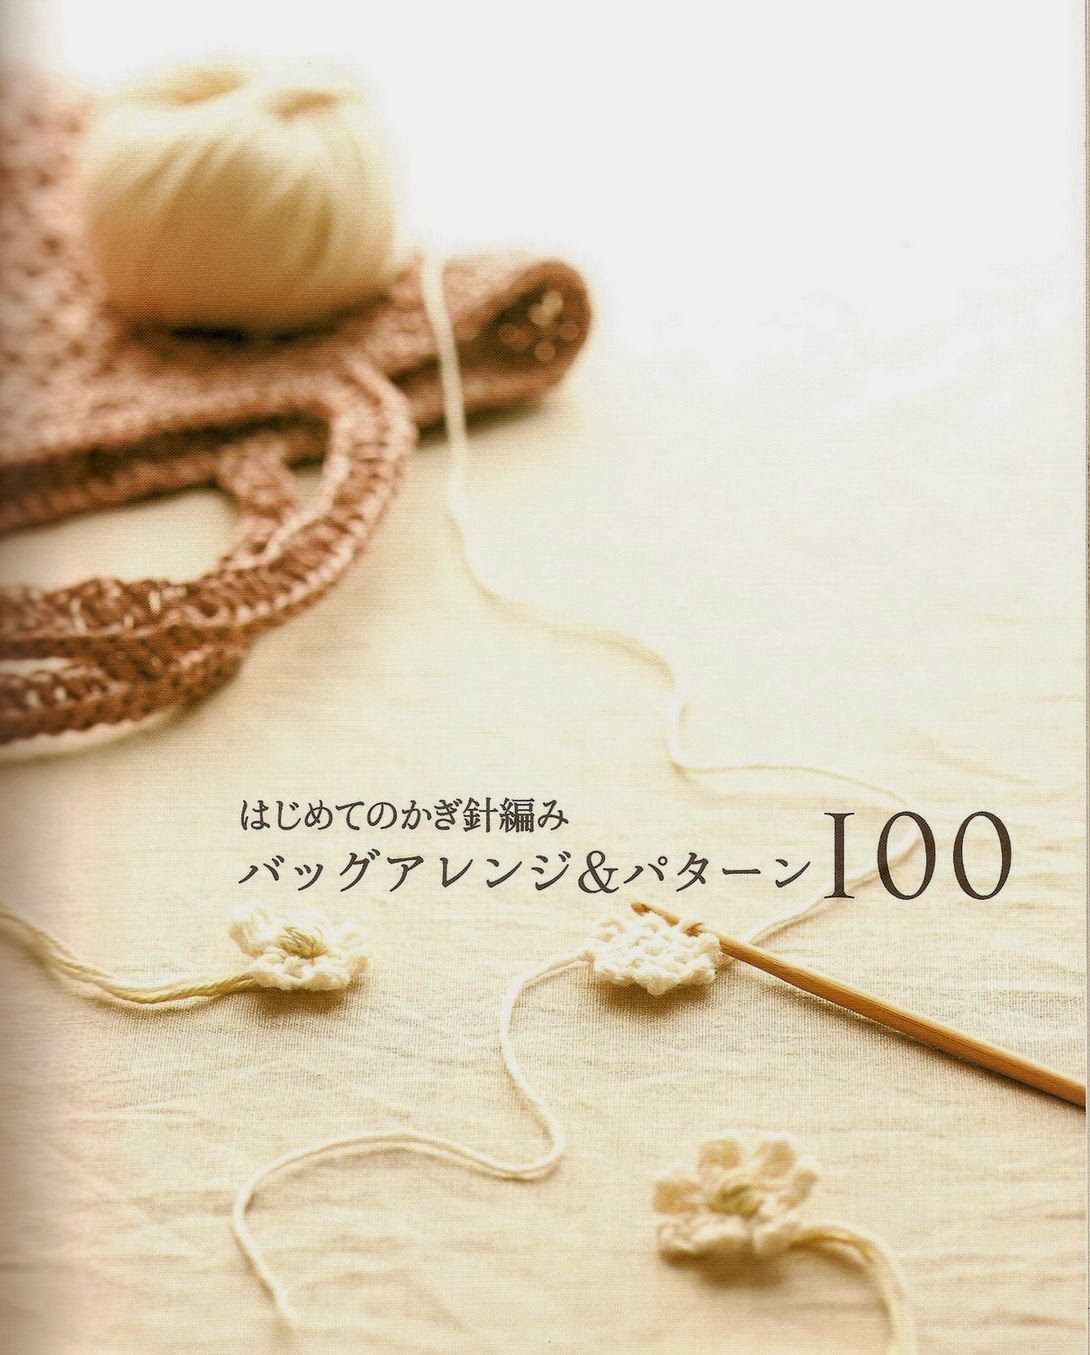 Handmade bằng len: Ebook 24 - Hướng dẫn móc túi len